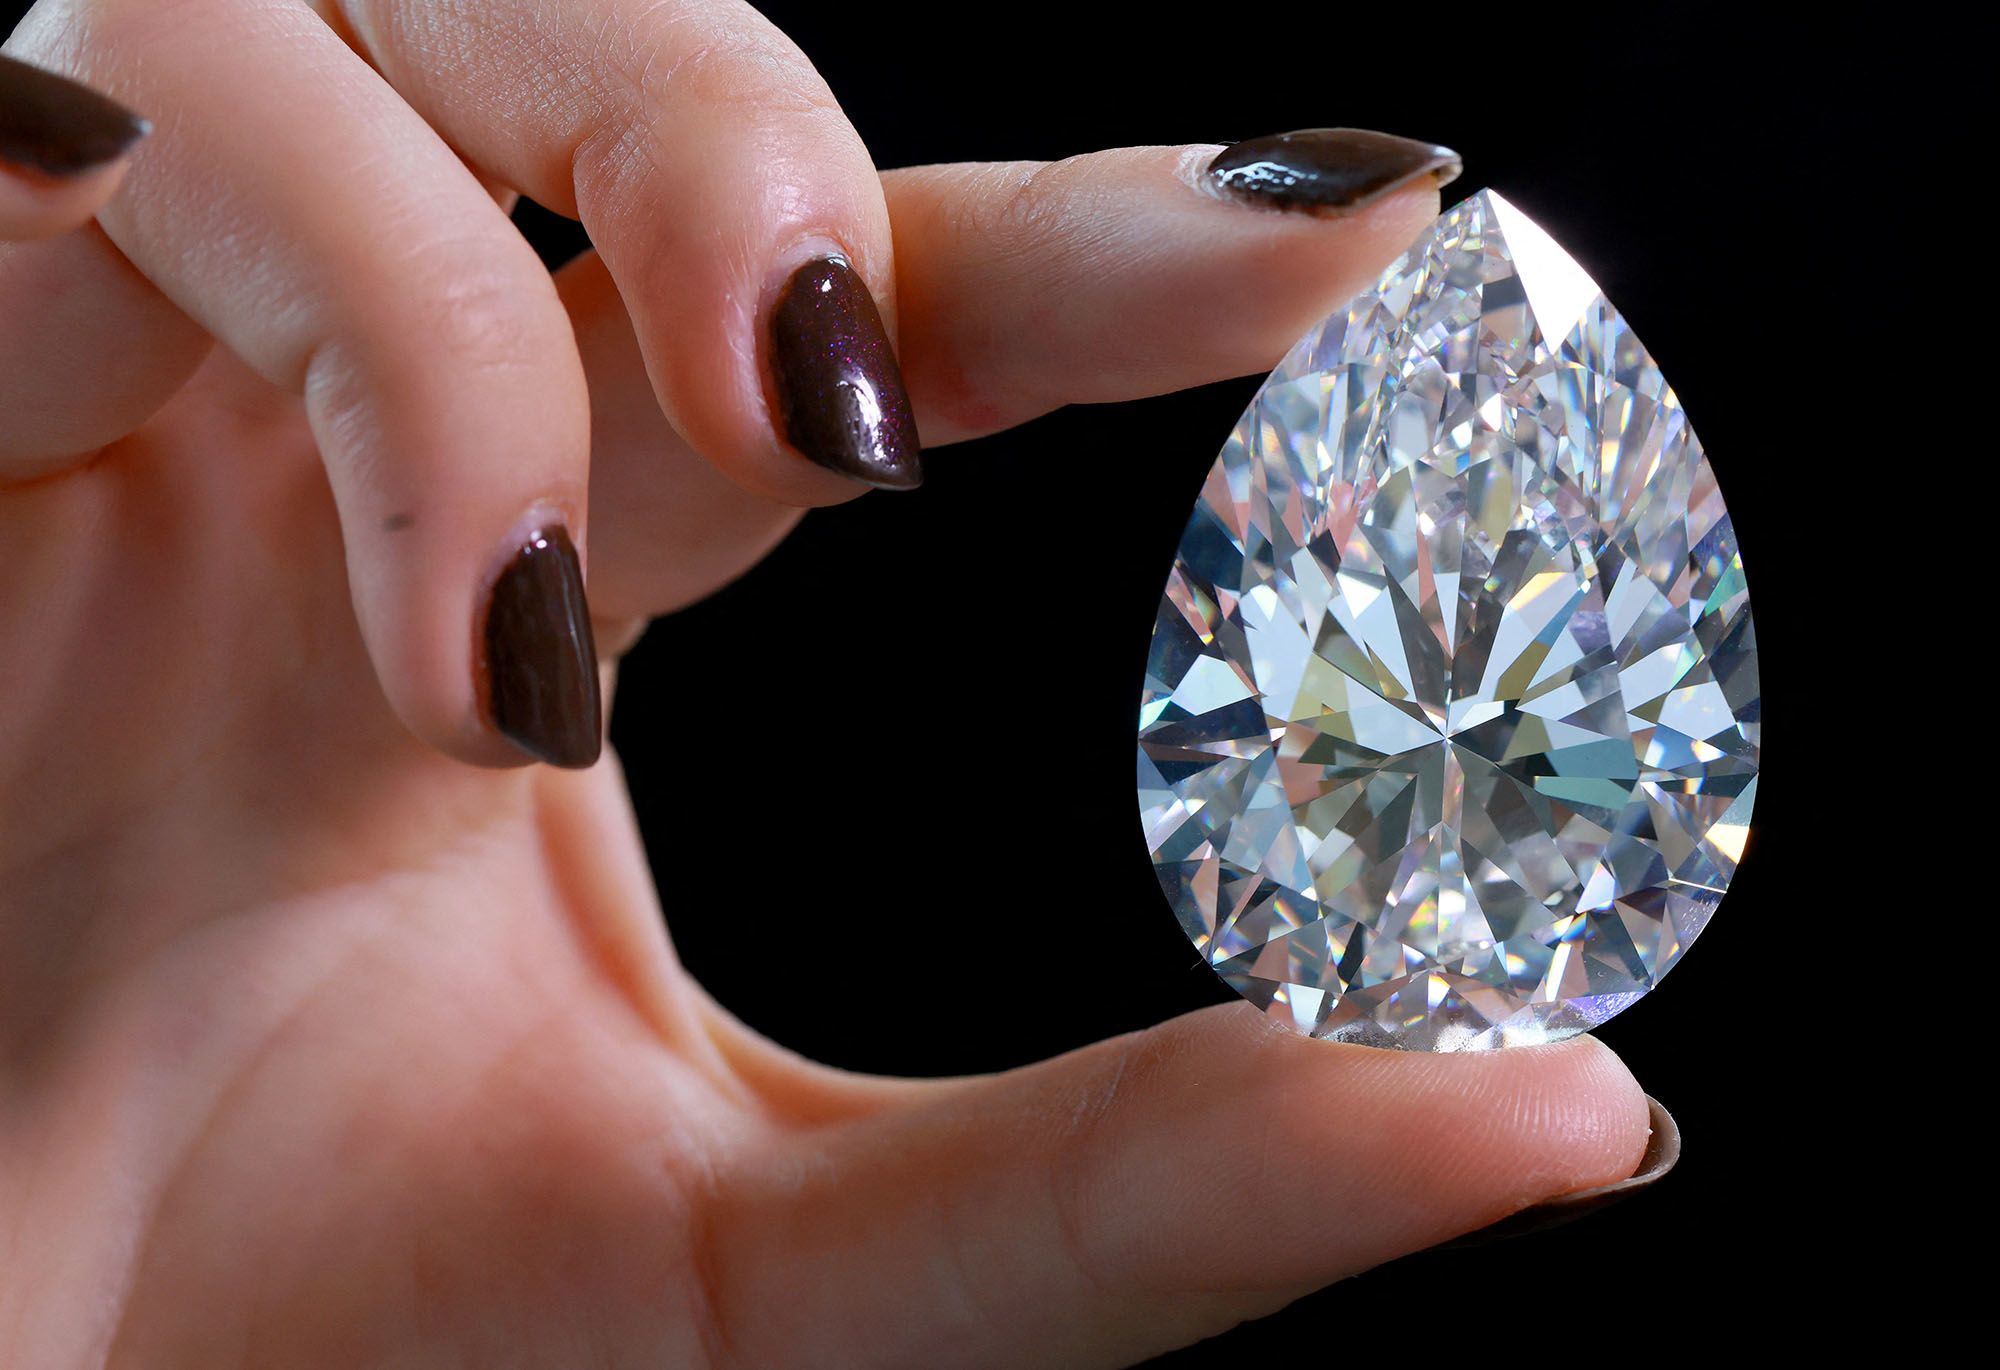 https://media.cnn.com/api/v1/images/stellar/prod/220509104555-01-rock-white-diamond-auction.jpg?c=original